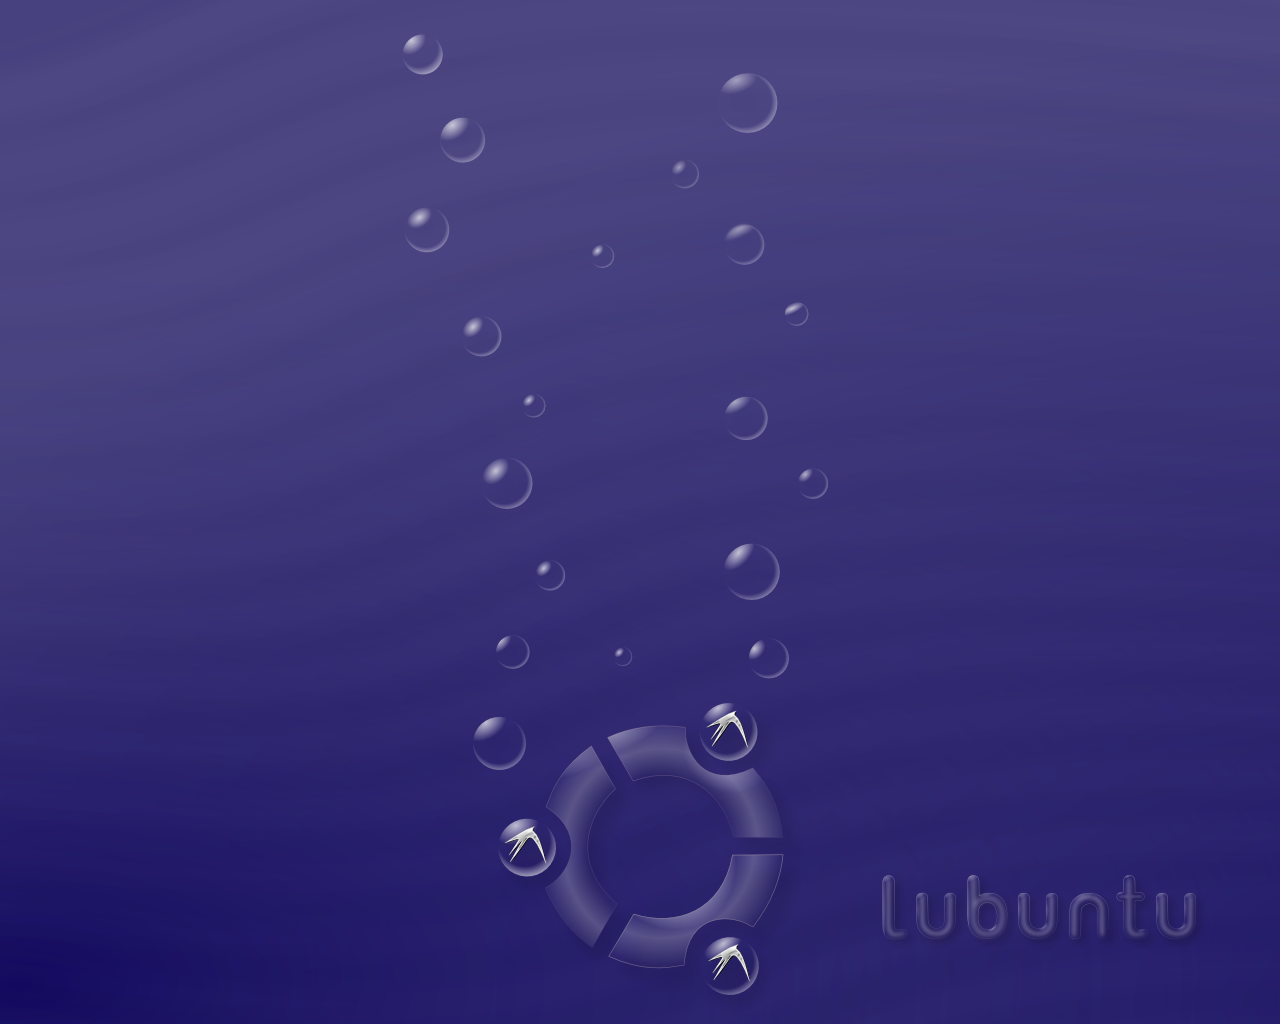 Lubuntu Wallpaper Image Pictures Becuo